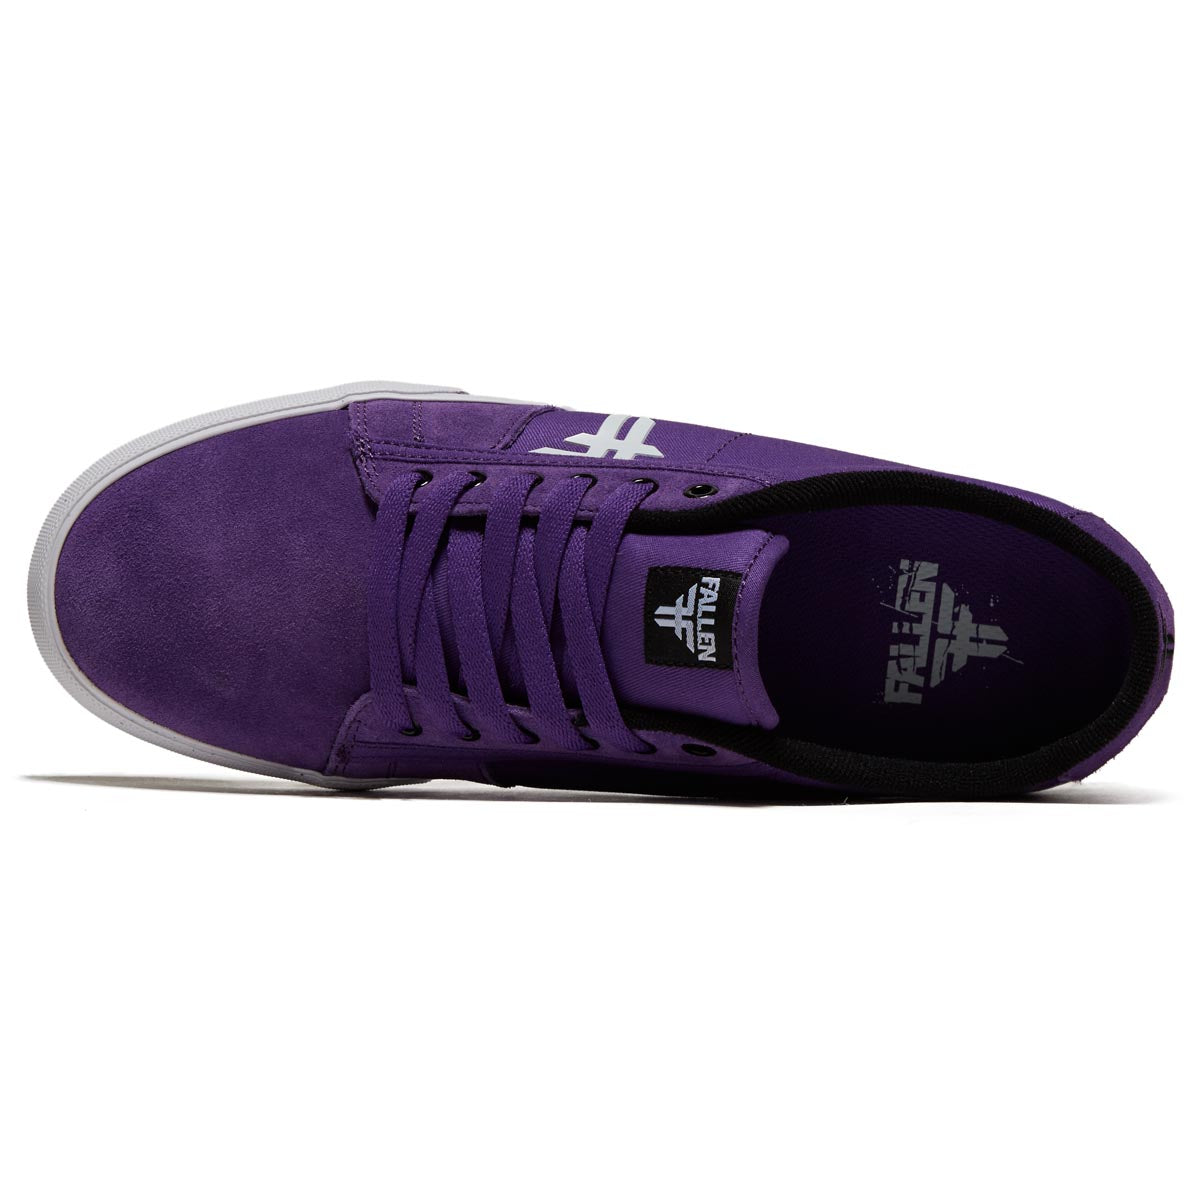 Fallen Bomber Shoes - Purple/White image 3